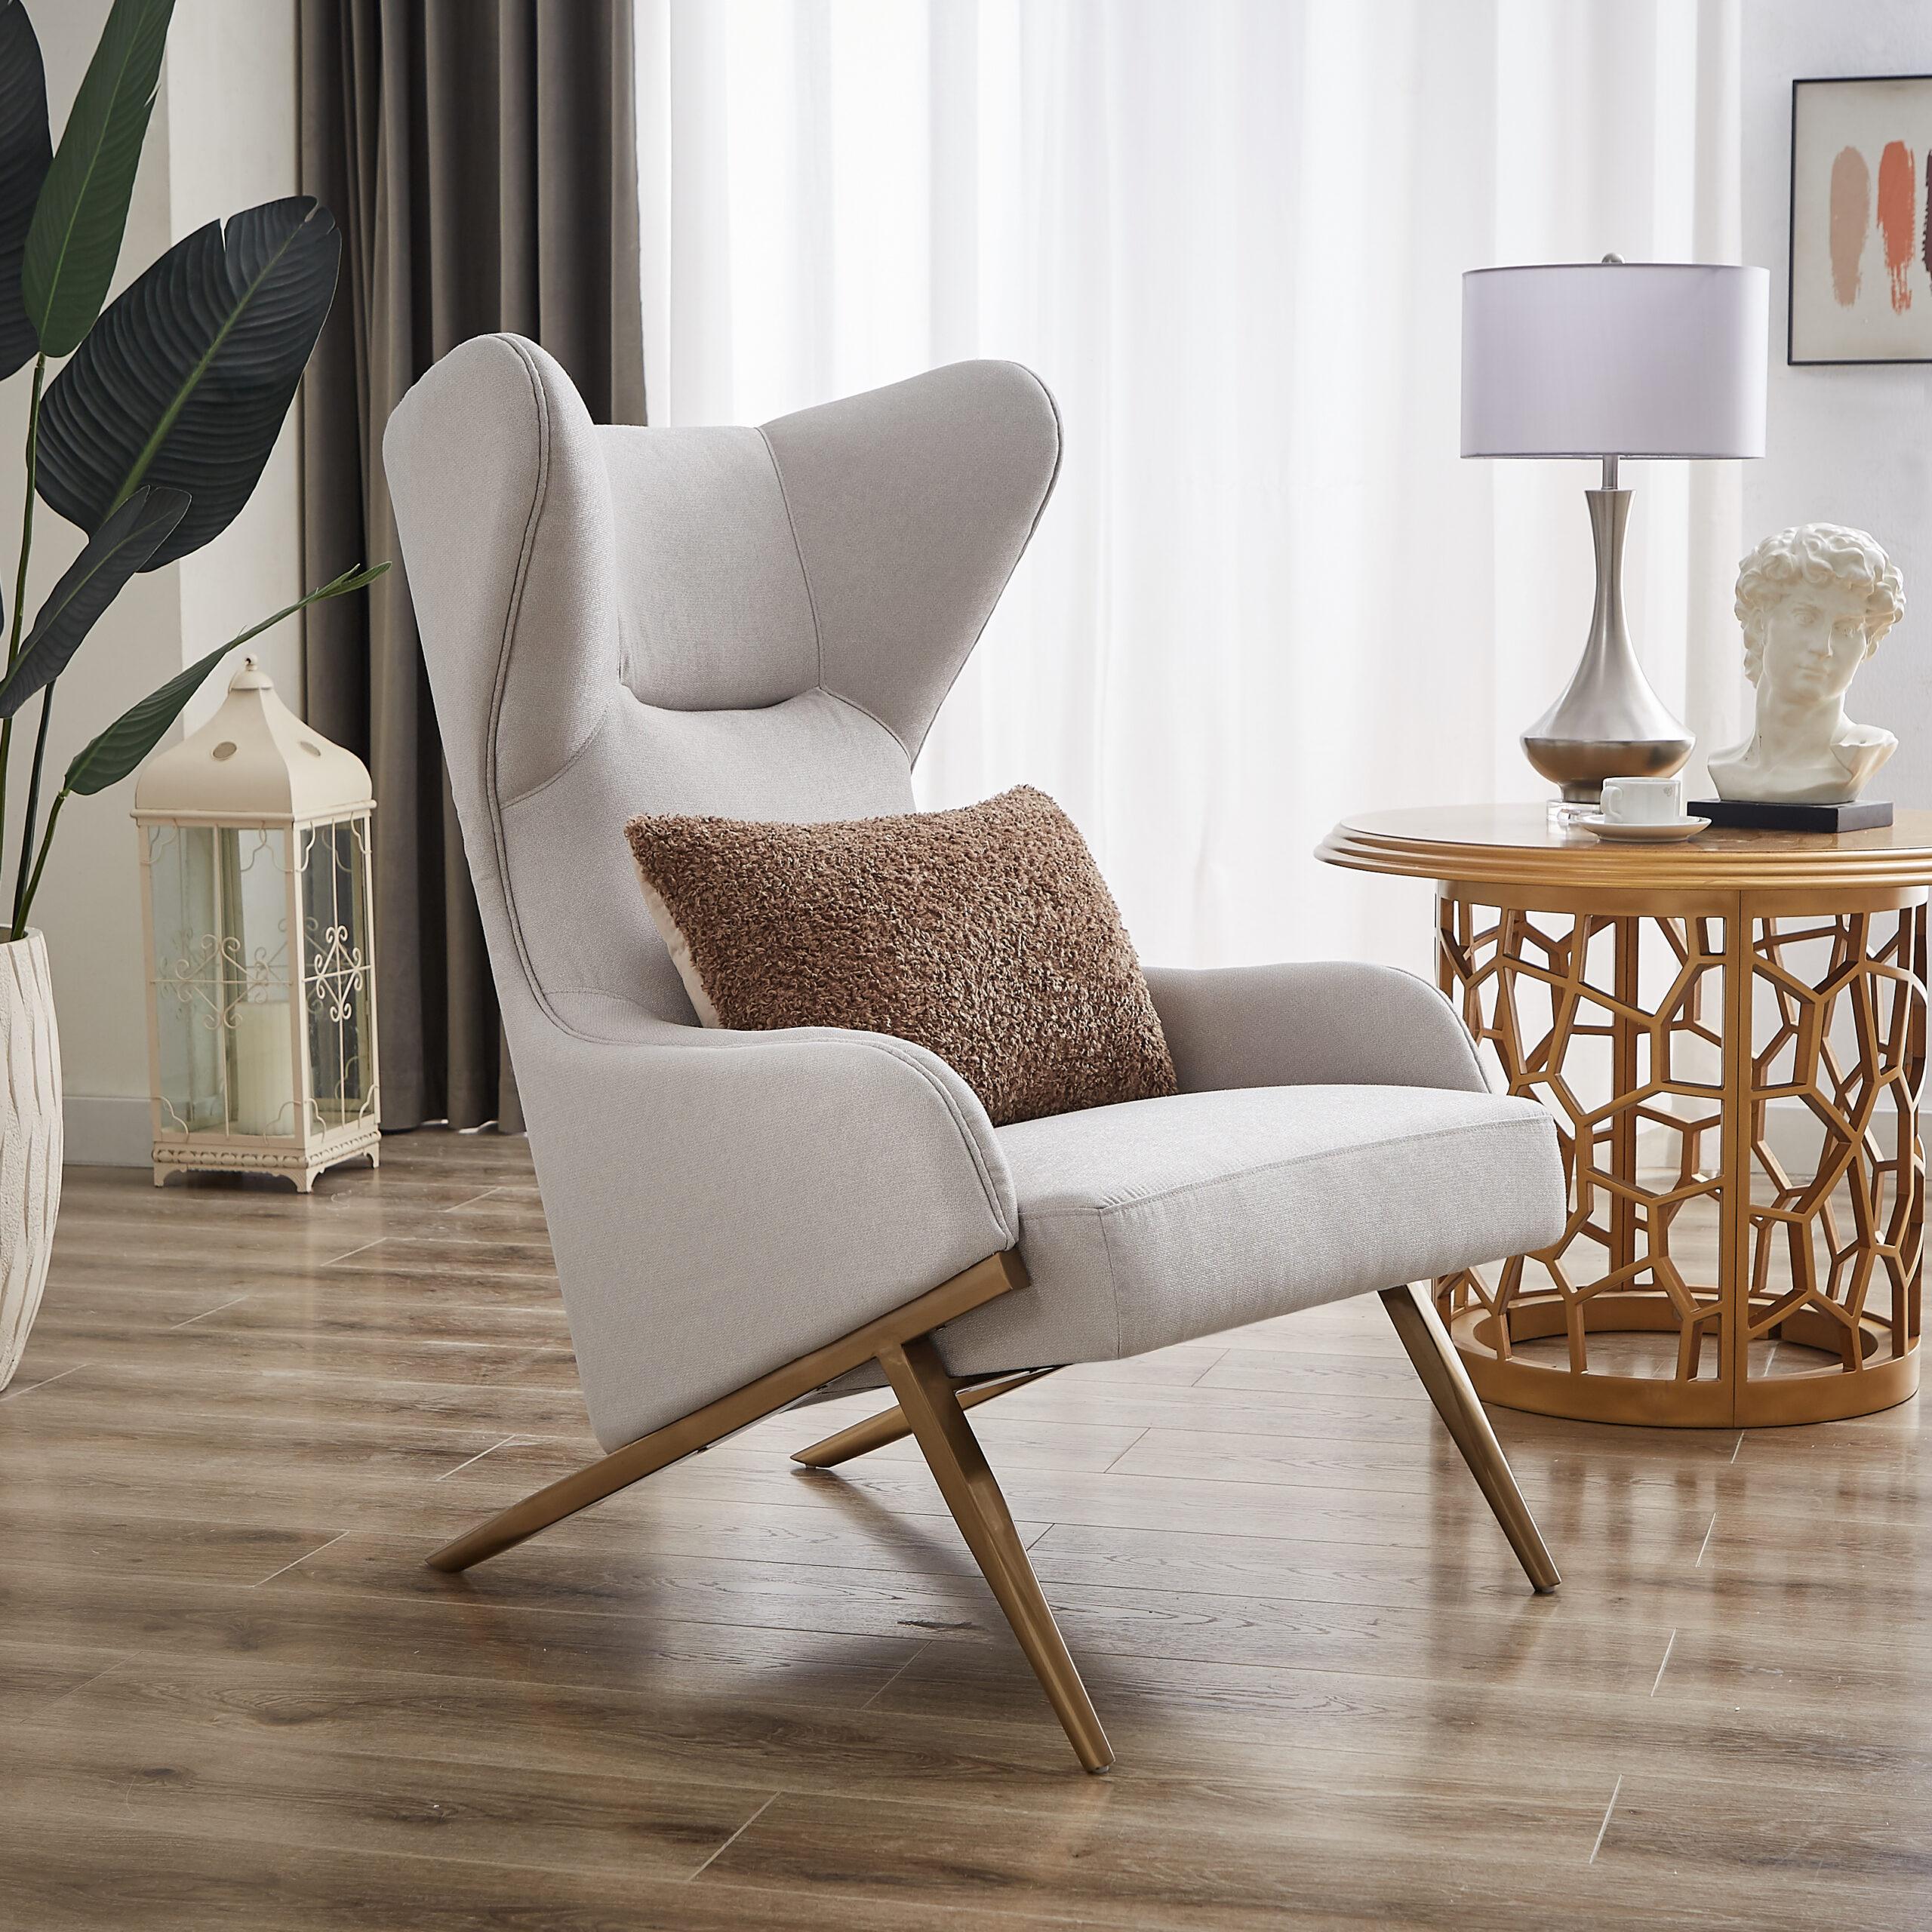 

    
Homey Design Furniture HD-9027 Living Room Set 3PCS HD-3PC9027 Living Room Set Light Gray/Gold HD-3PC9027
